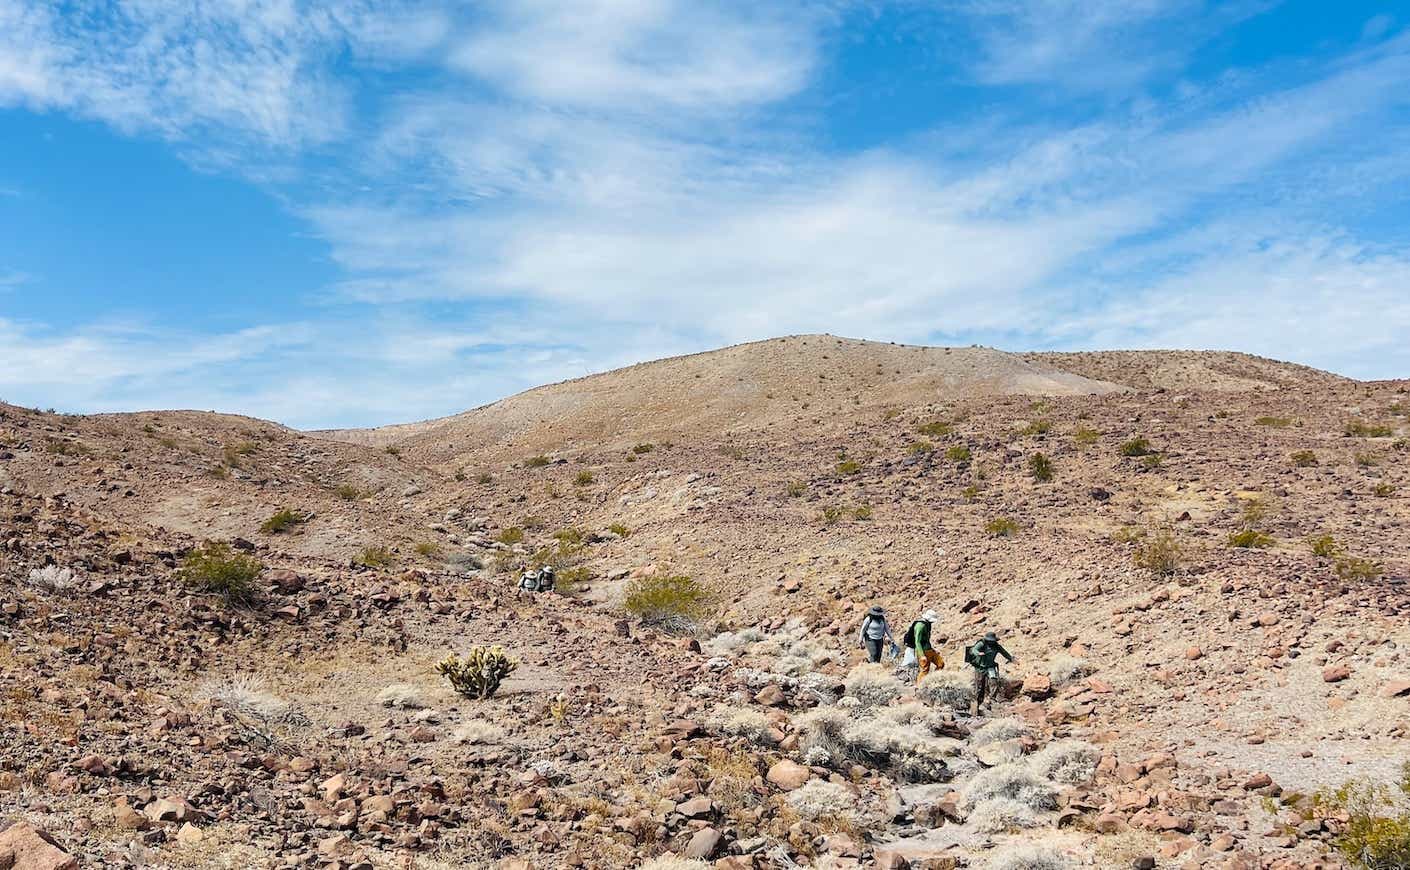 People hike through a desert